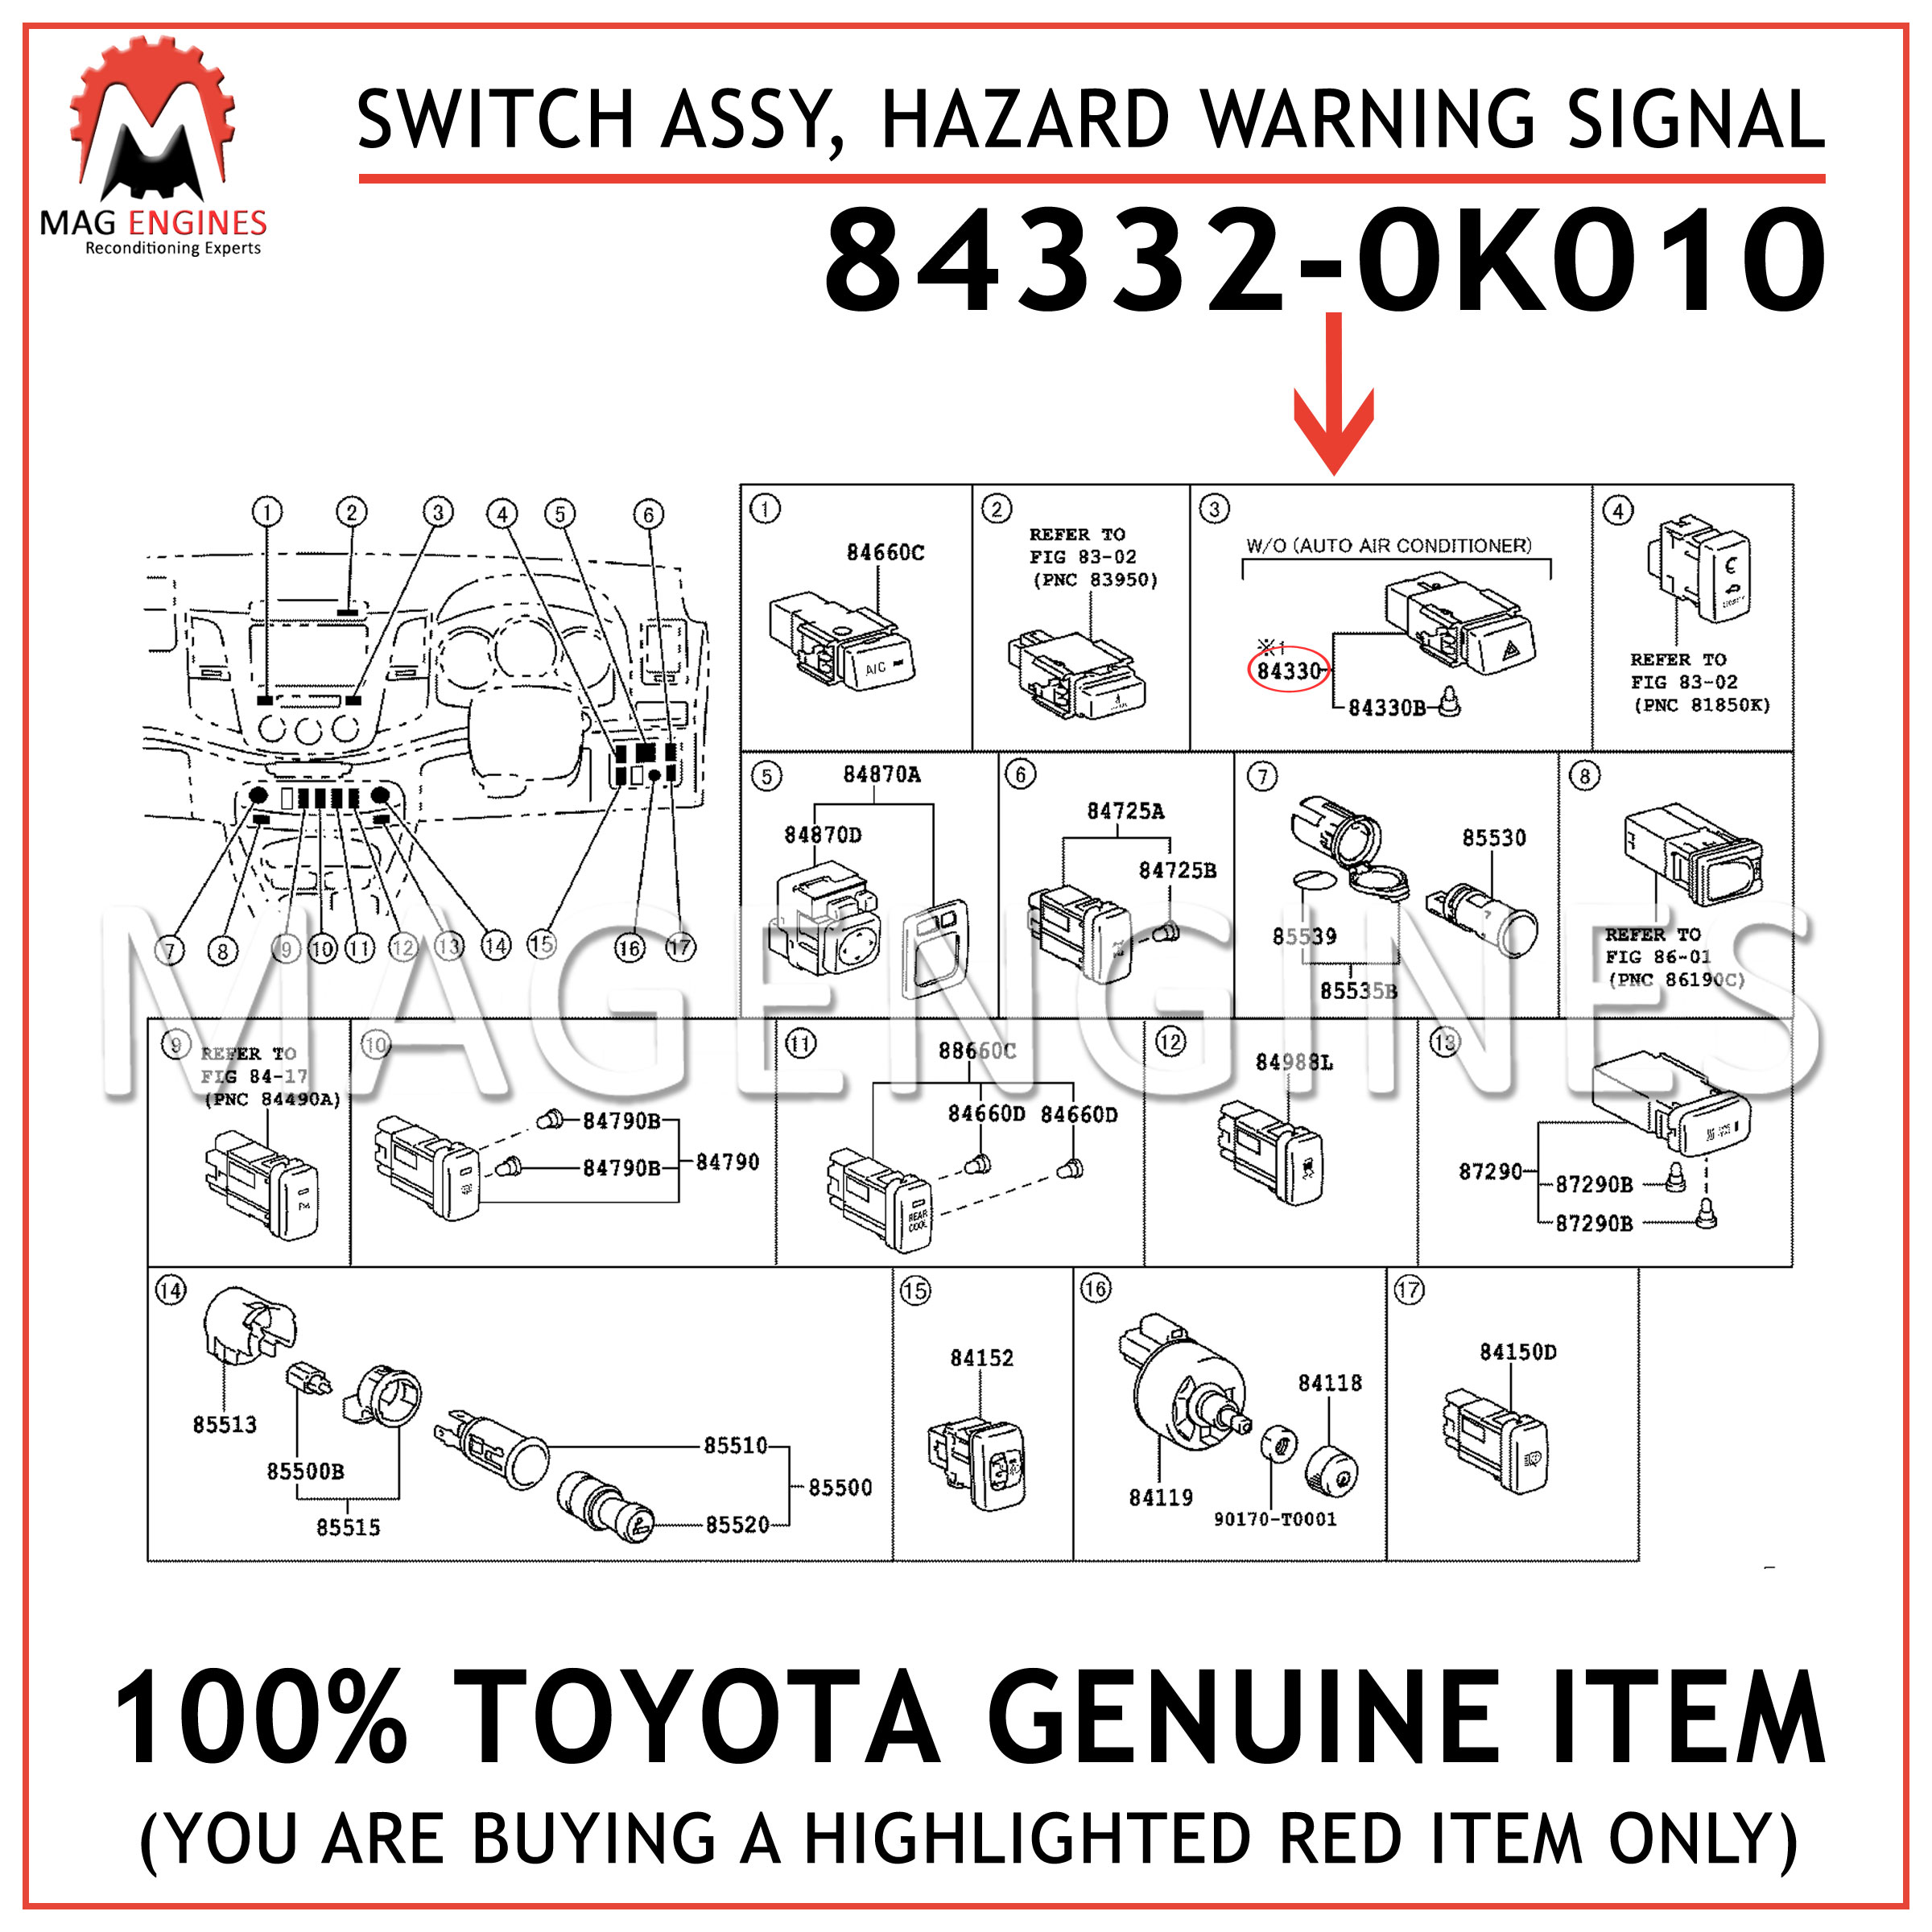 Toyota 84330-52010 Hazard Warning Signal Switch Assembly 